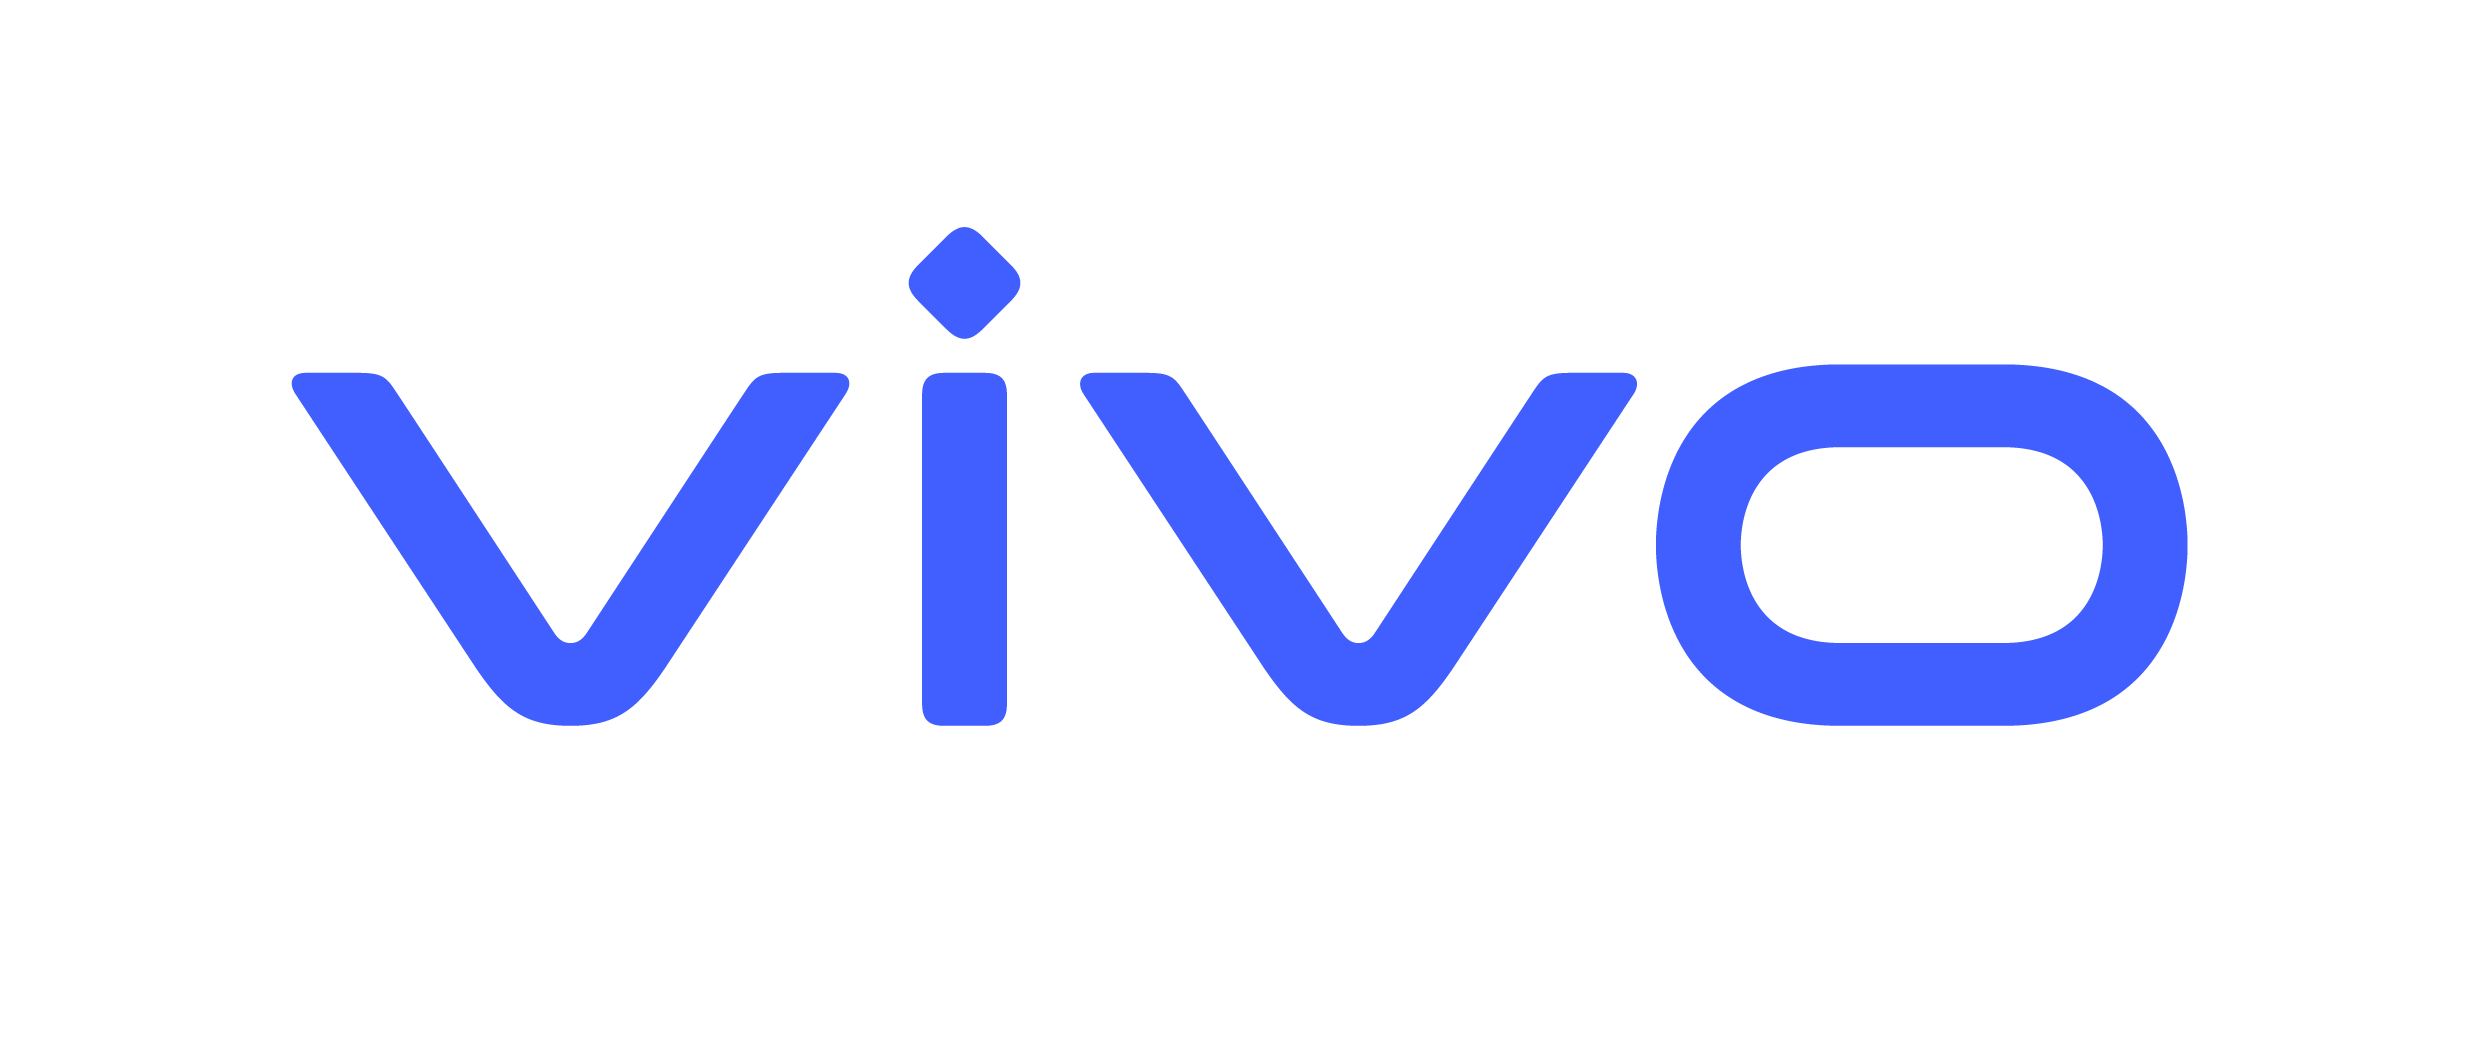 VIVO sparks next wave of smartphone innovation in Nepal